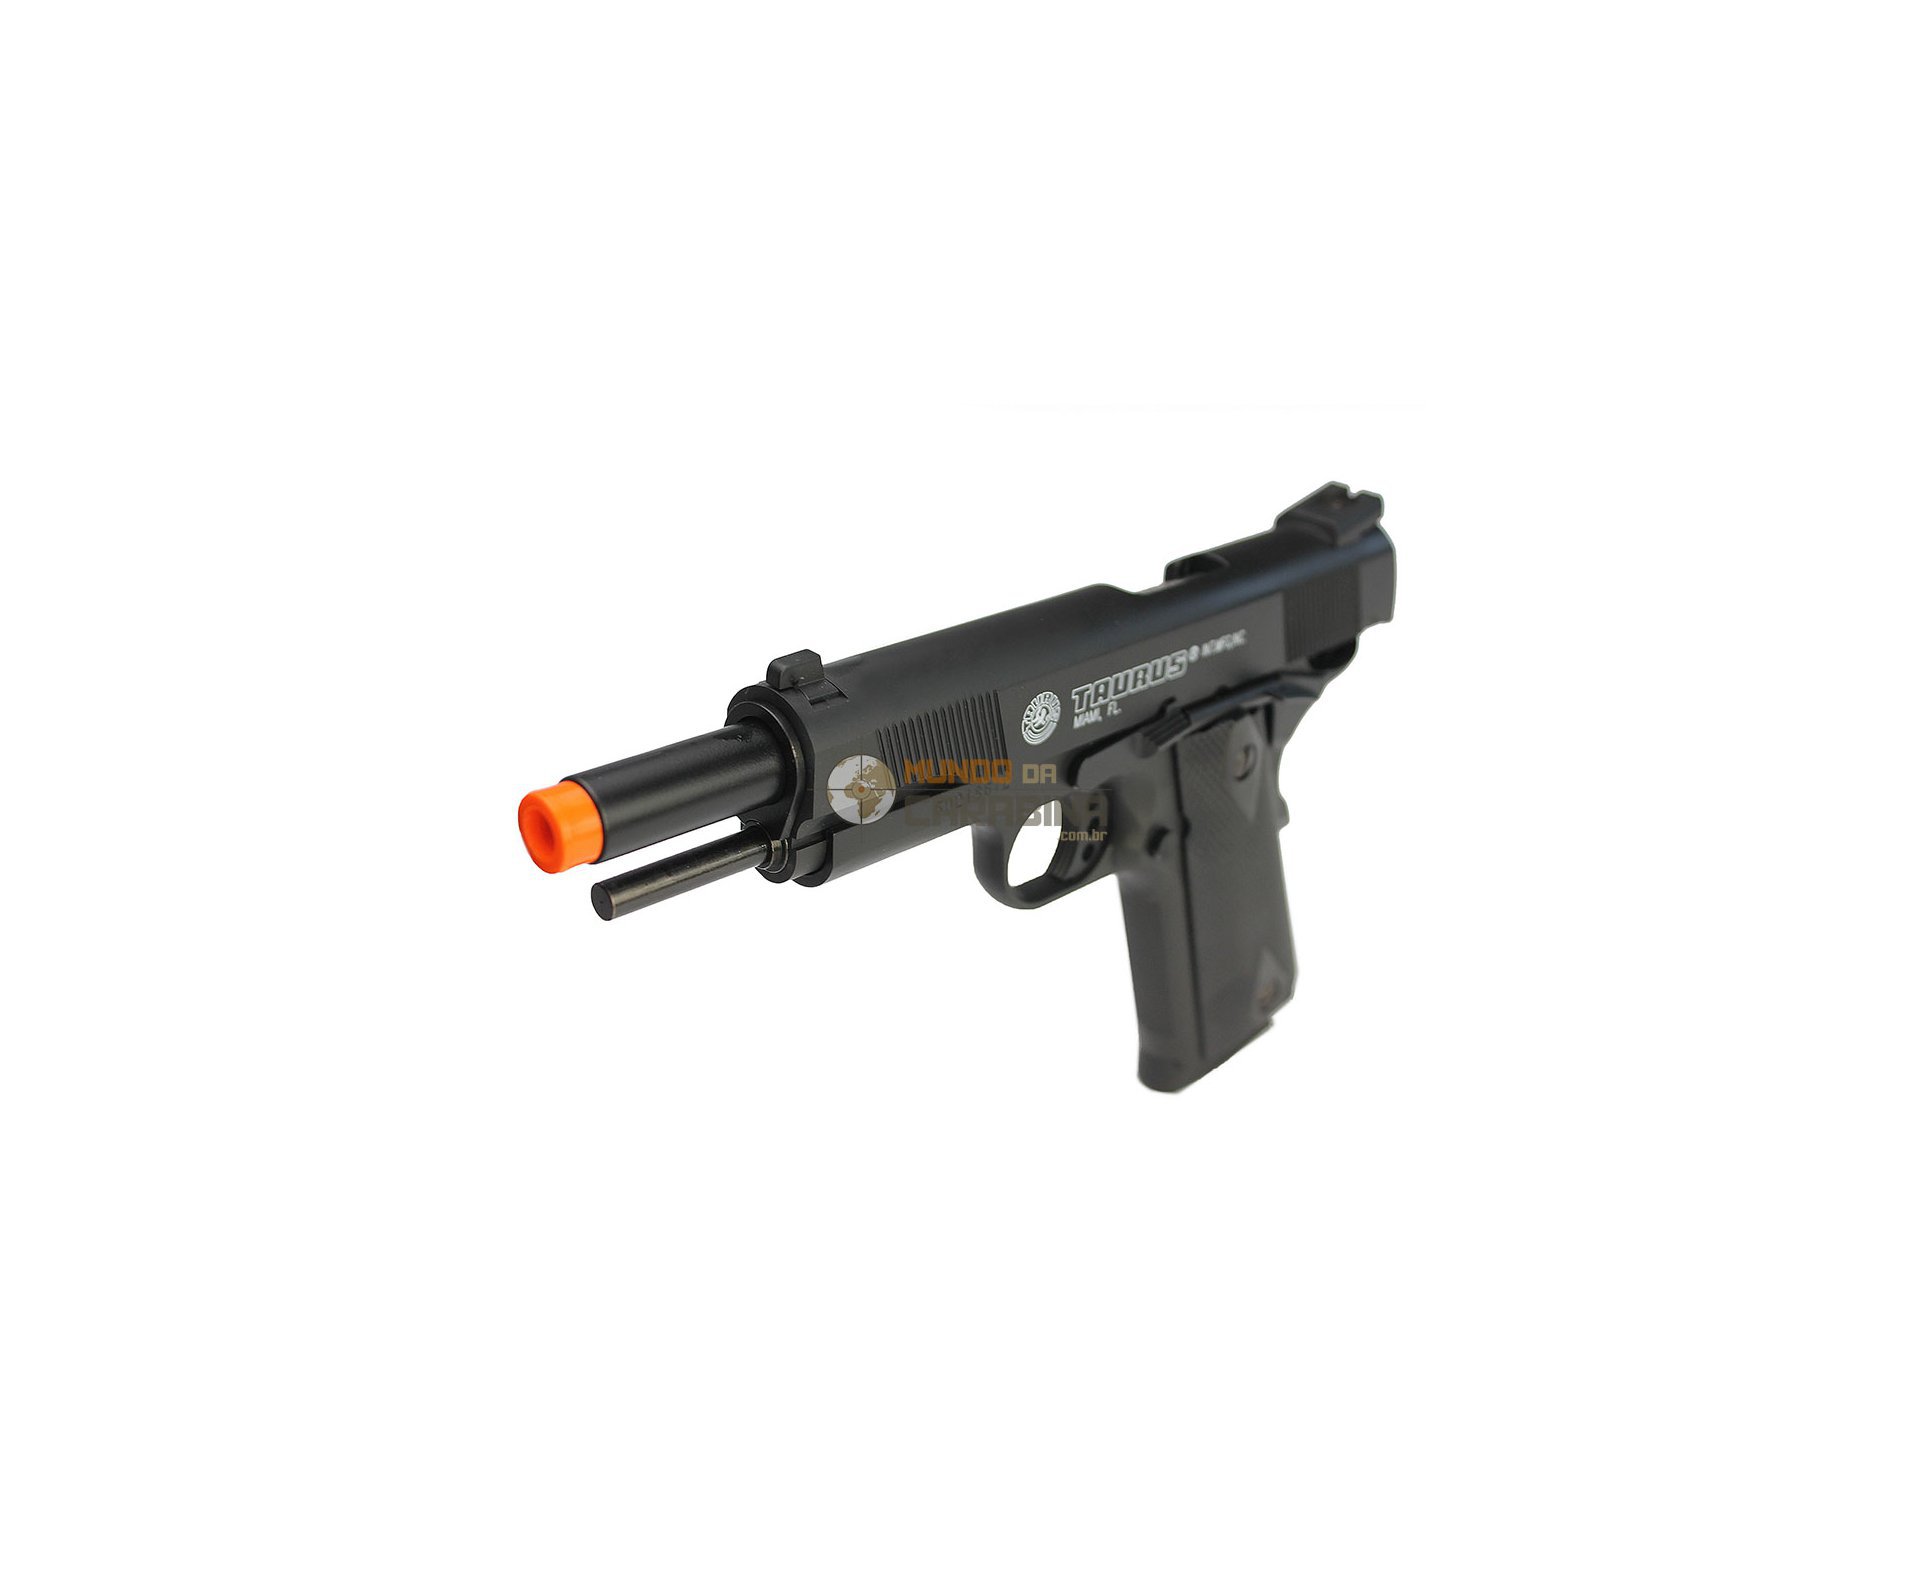 Pistola De Airsoft Pt1911 Semi Metal - Cybergun